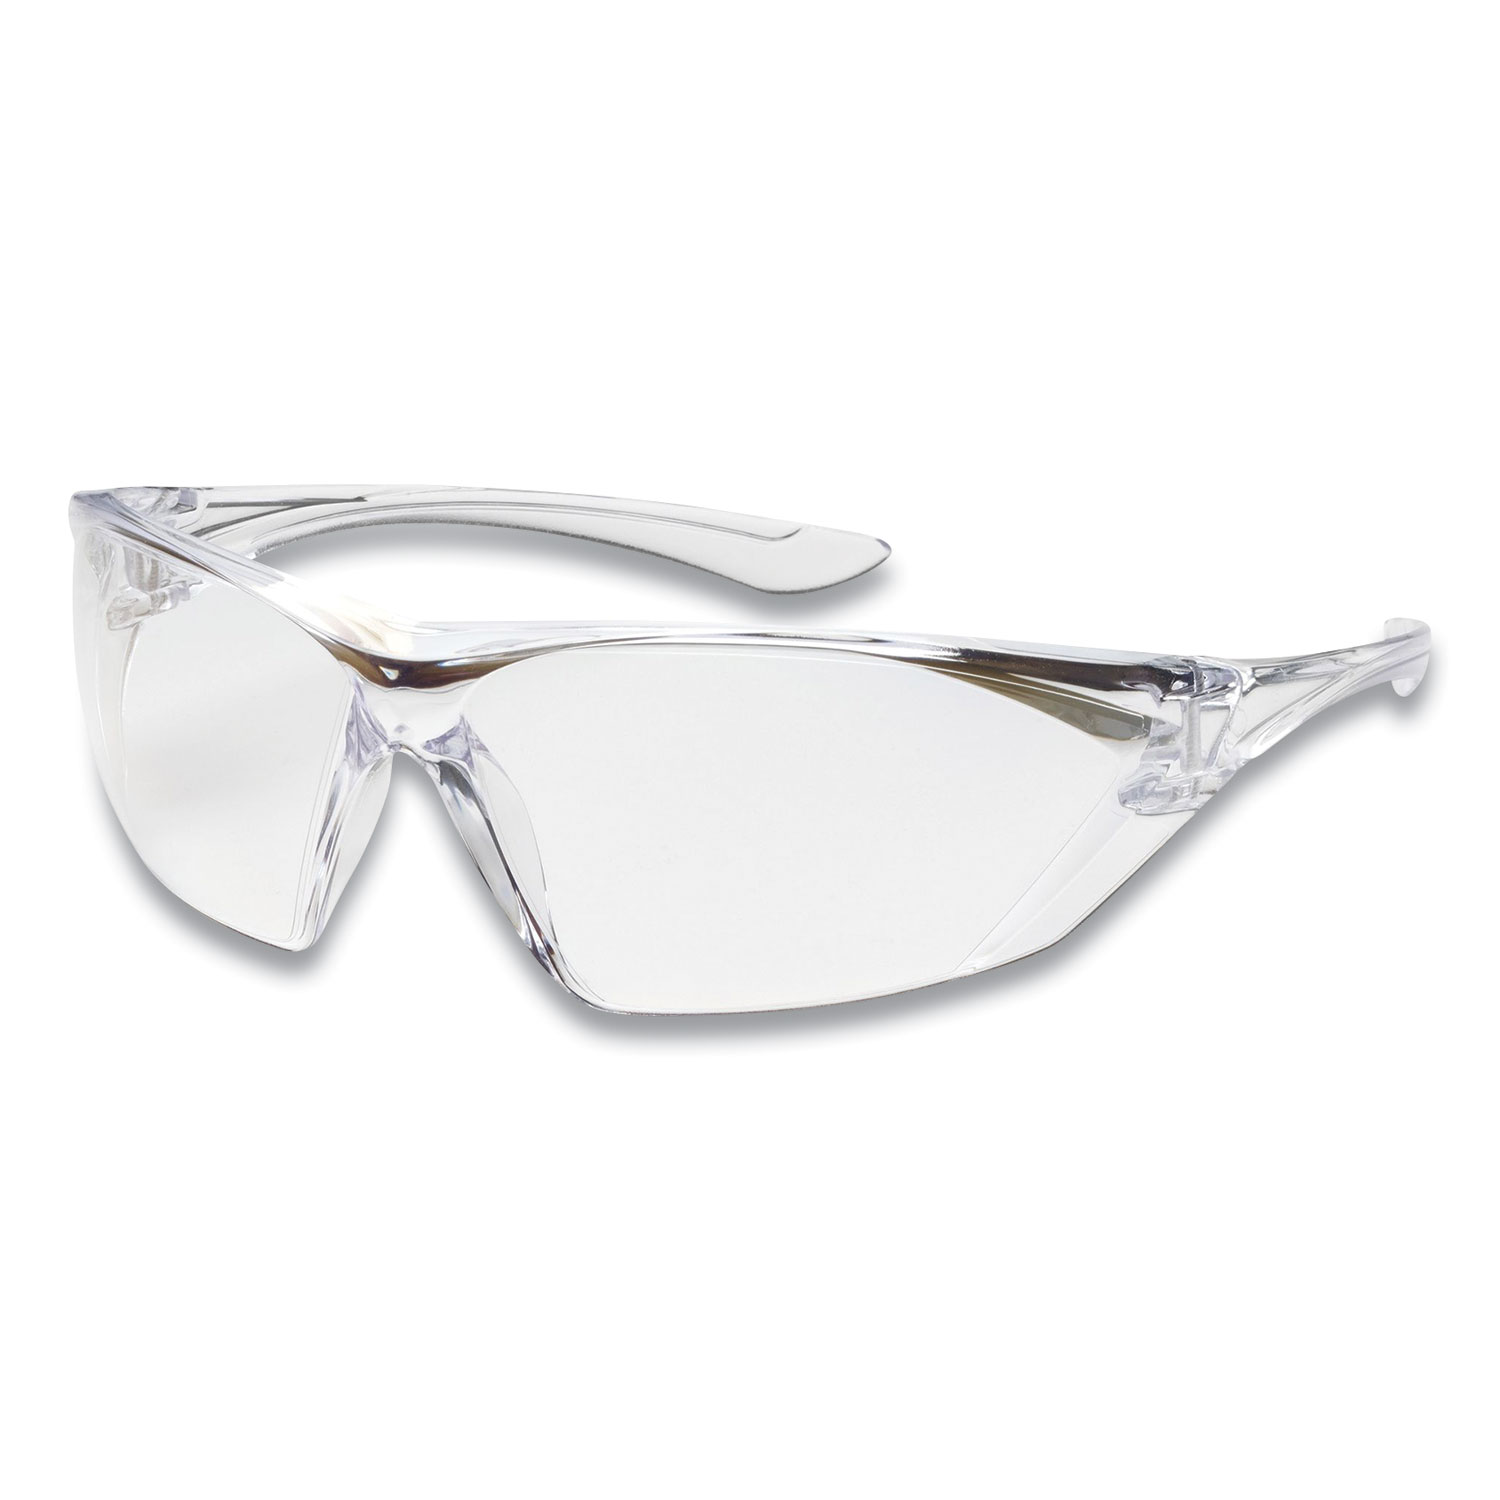 Bouton® Bullseye Rimless Safety Glasses, Anti-Fog, Anti-Scratch, Clear Lens, Clear Frame